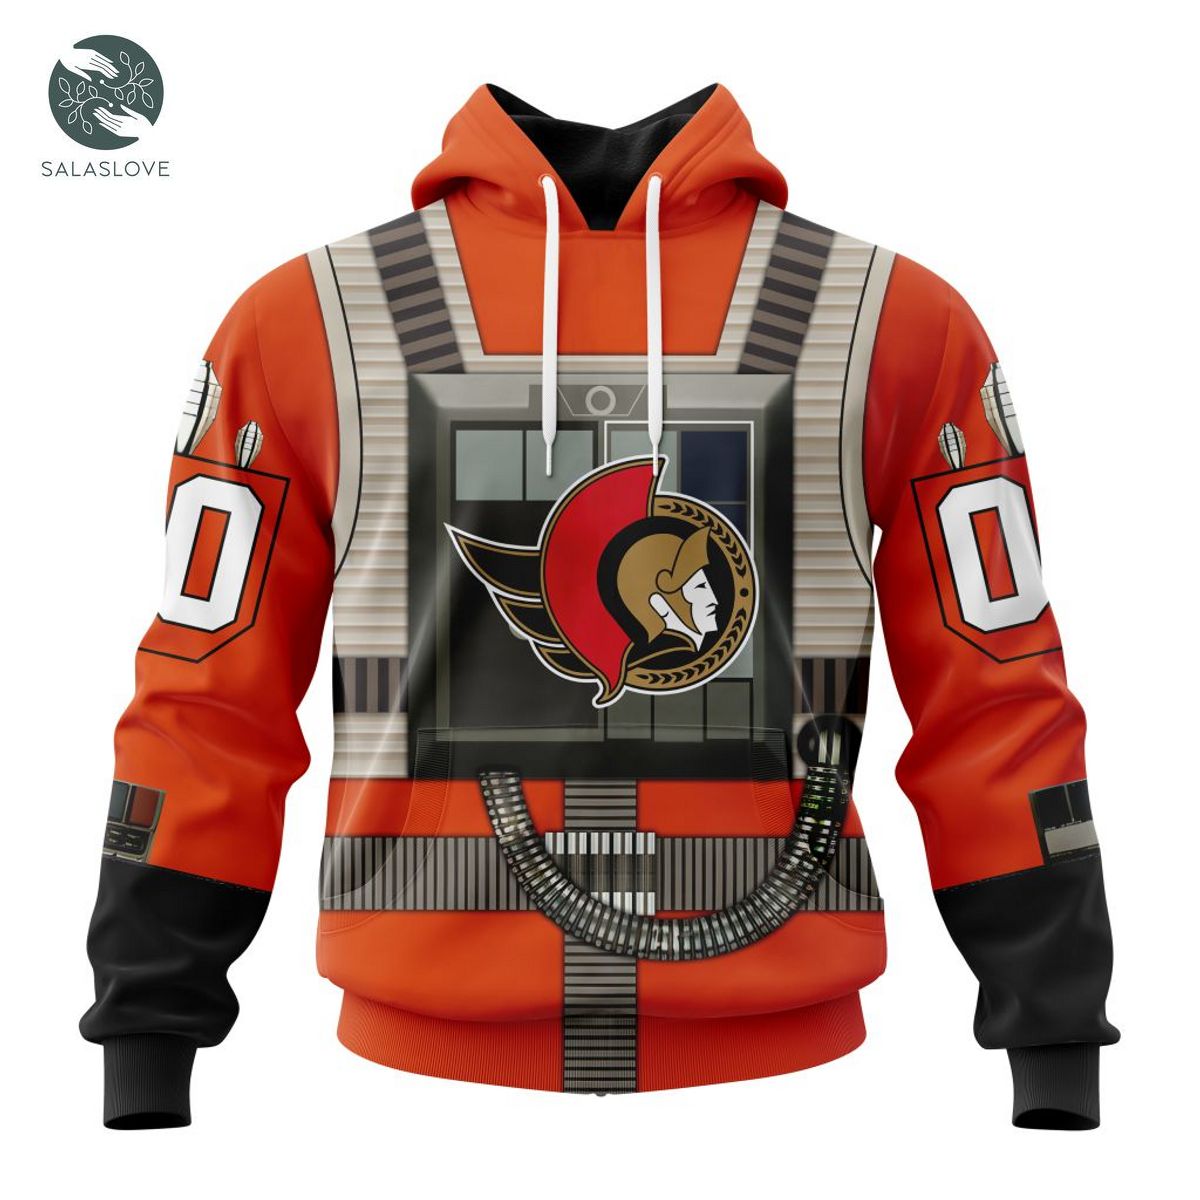 NHL Ottawa Senators Star Wars Rebel Pilot Design Hoodie